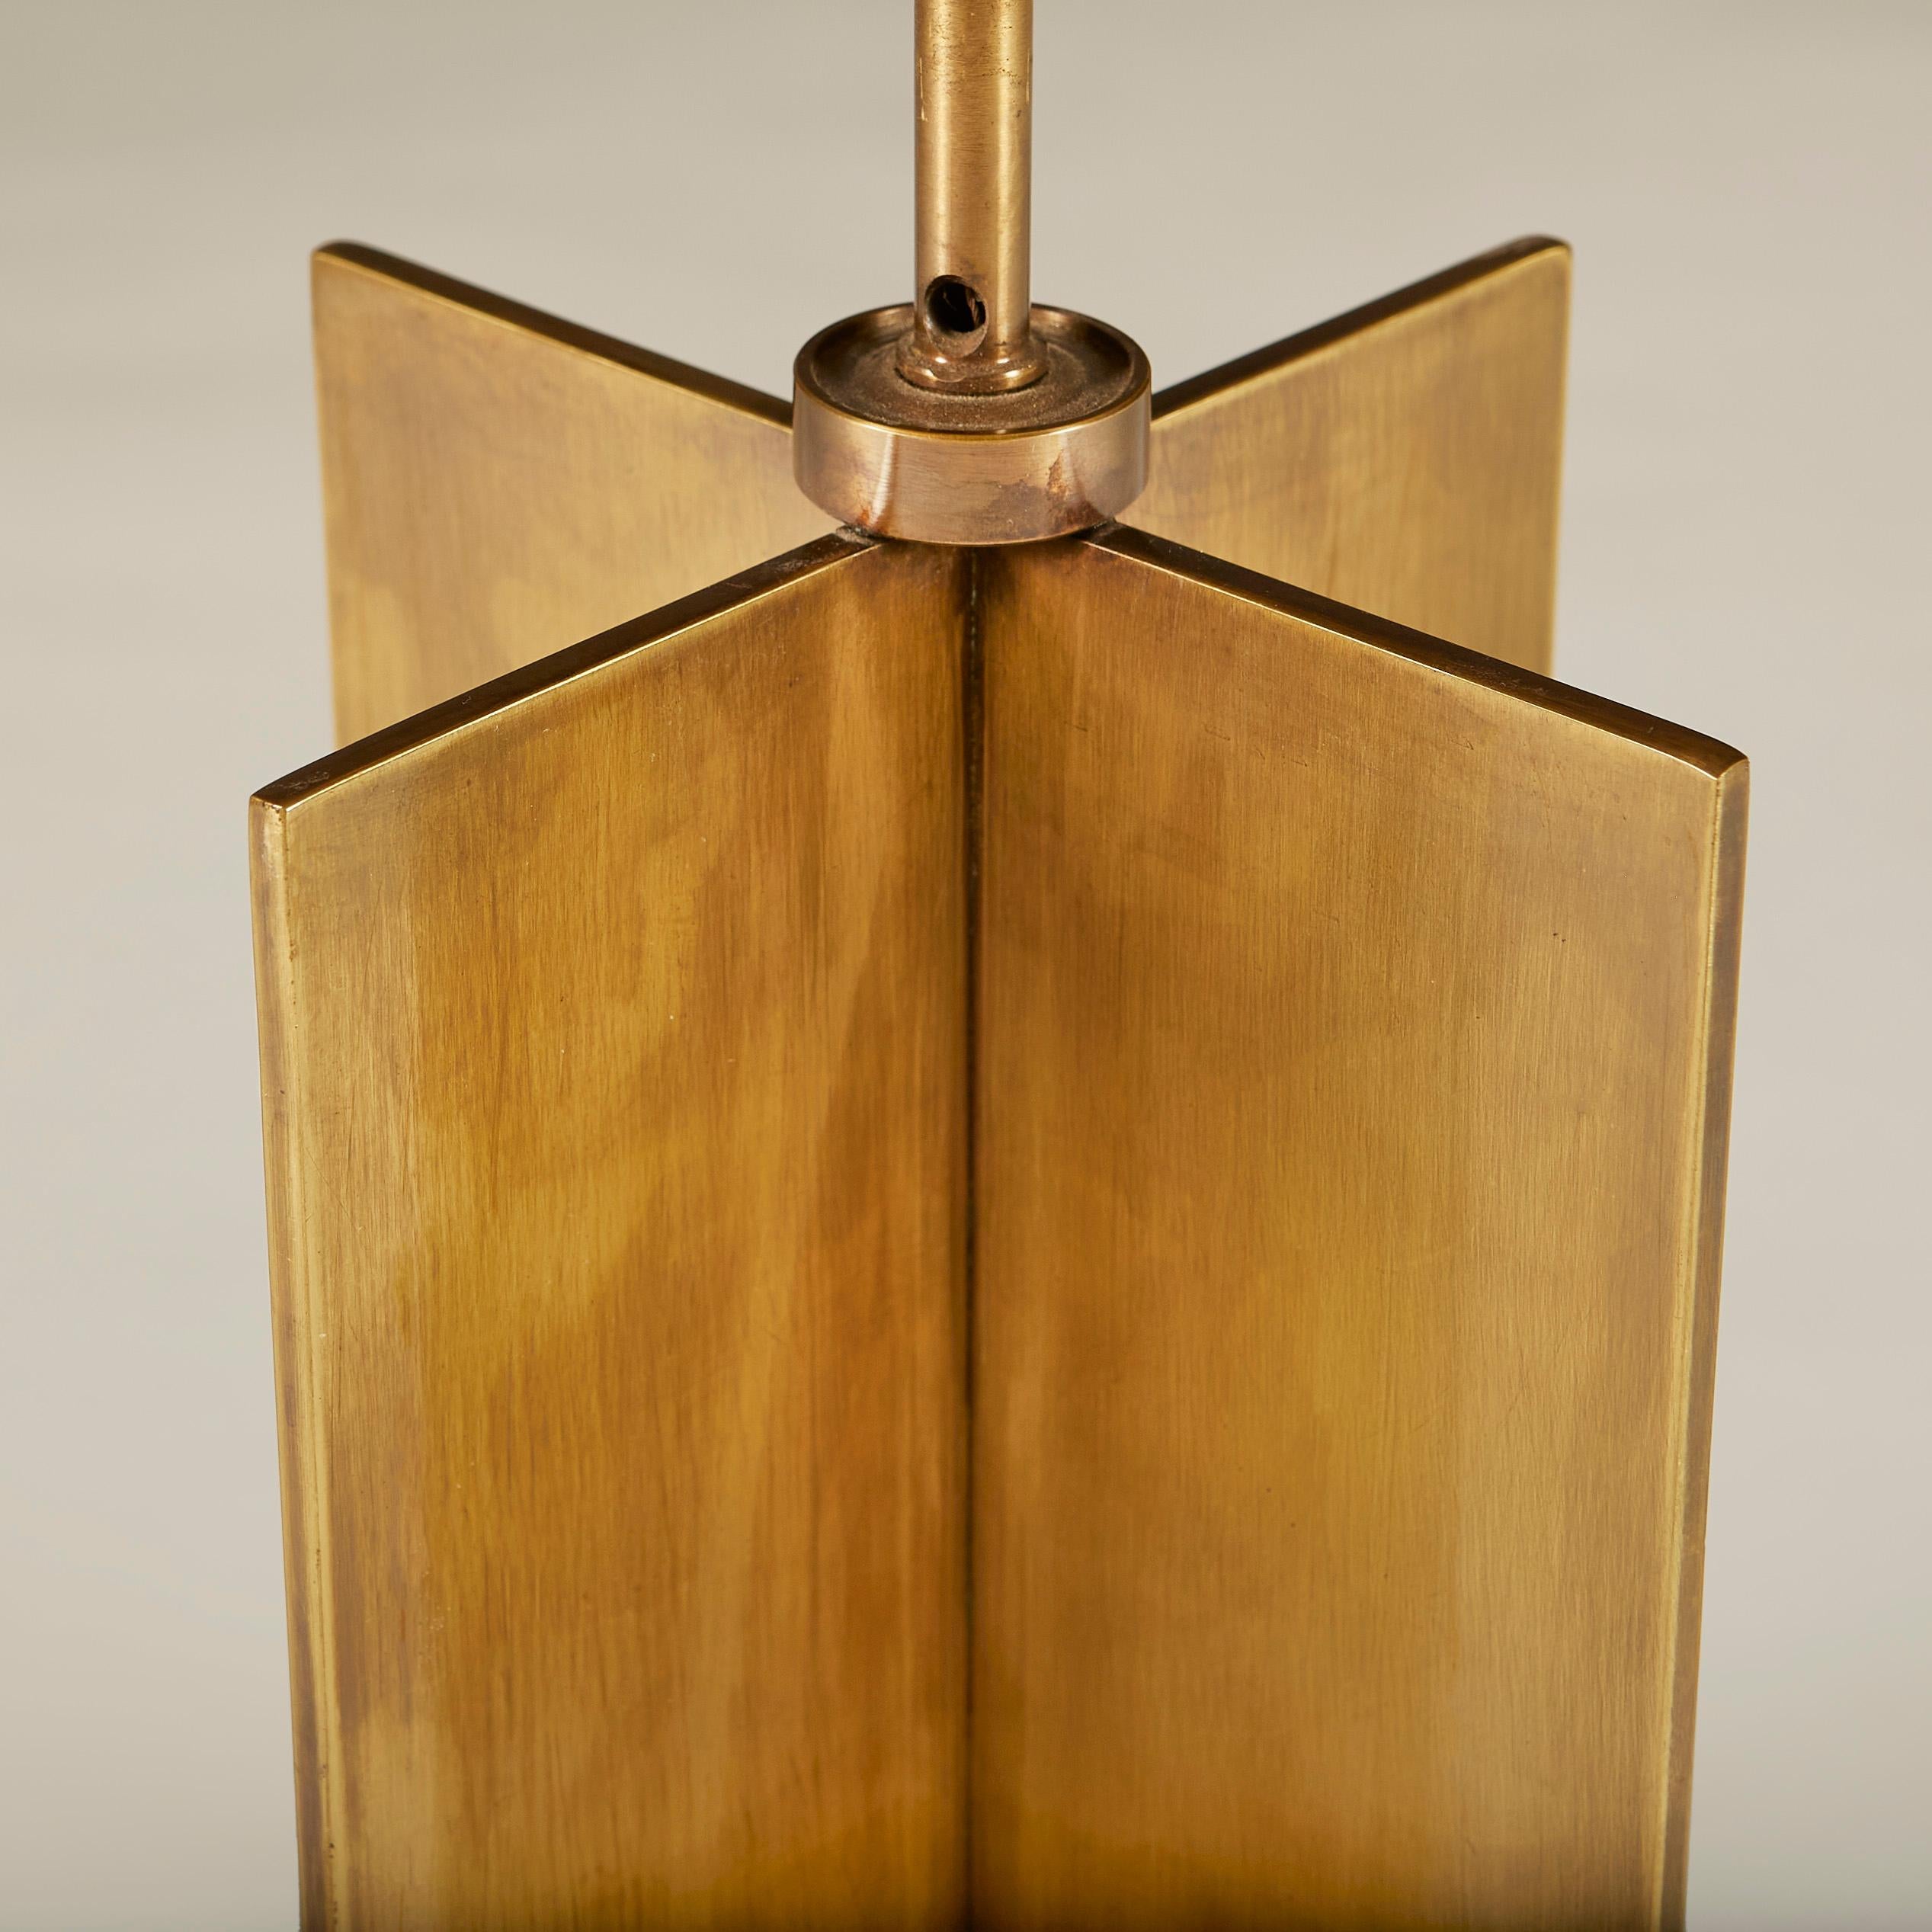 Pair of Original Jean-Michel Frank “Croisillon” Bronze Table Lamps, circa 1935 For Sale 4